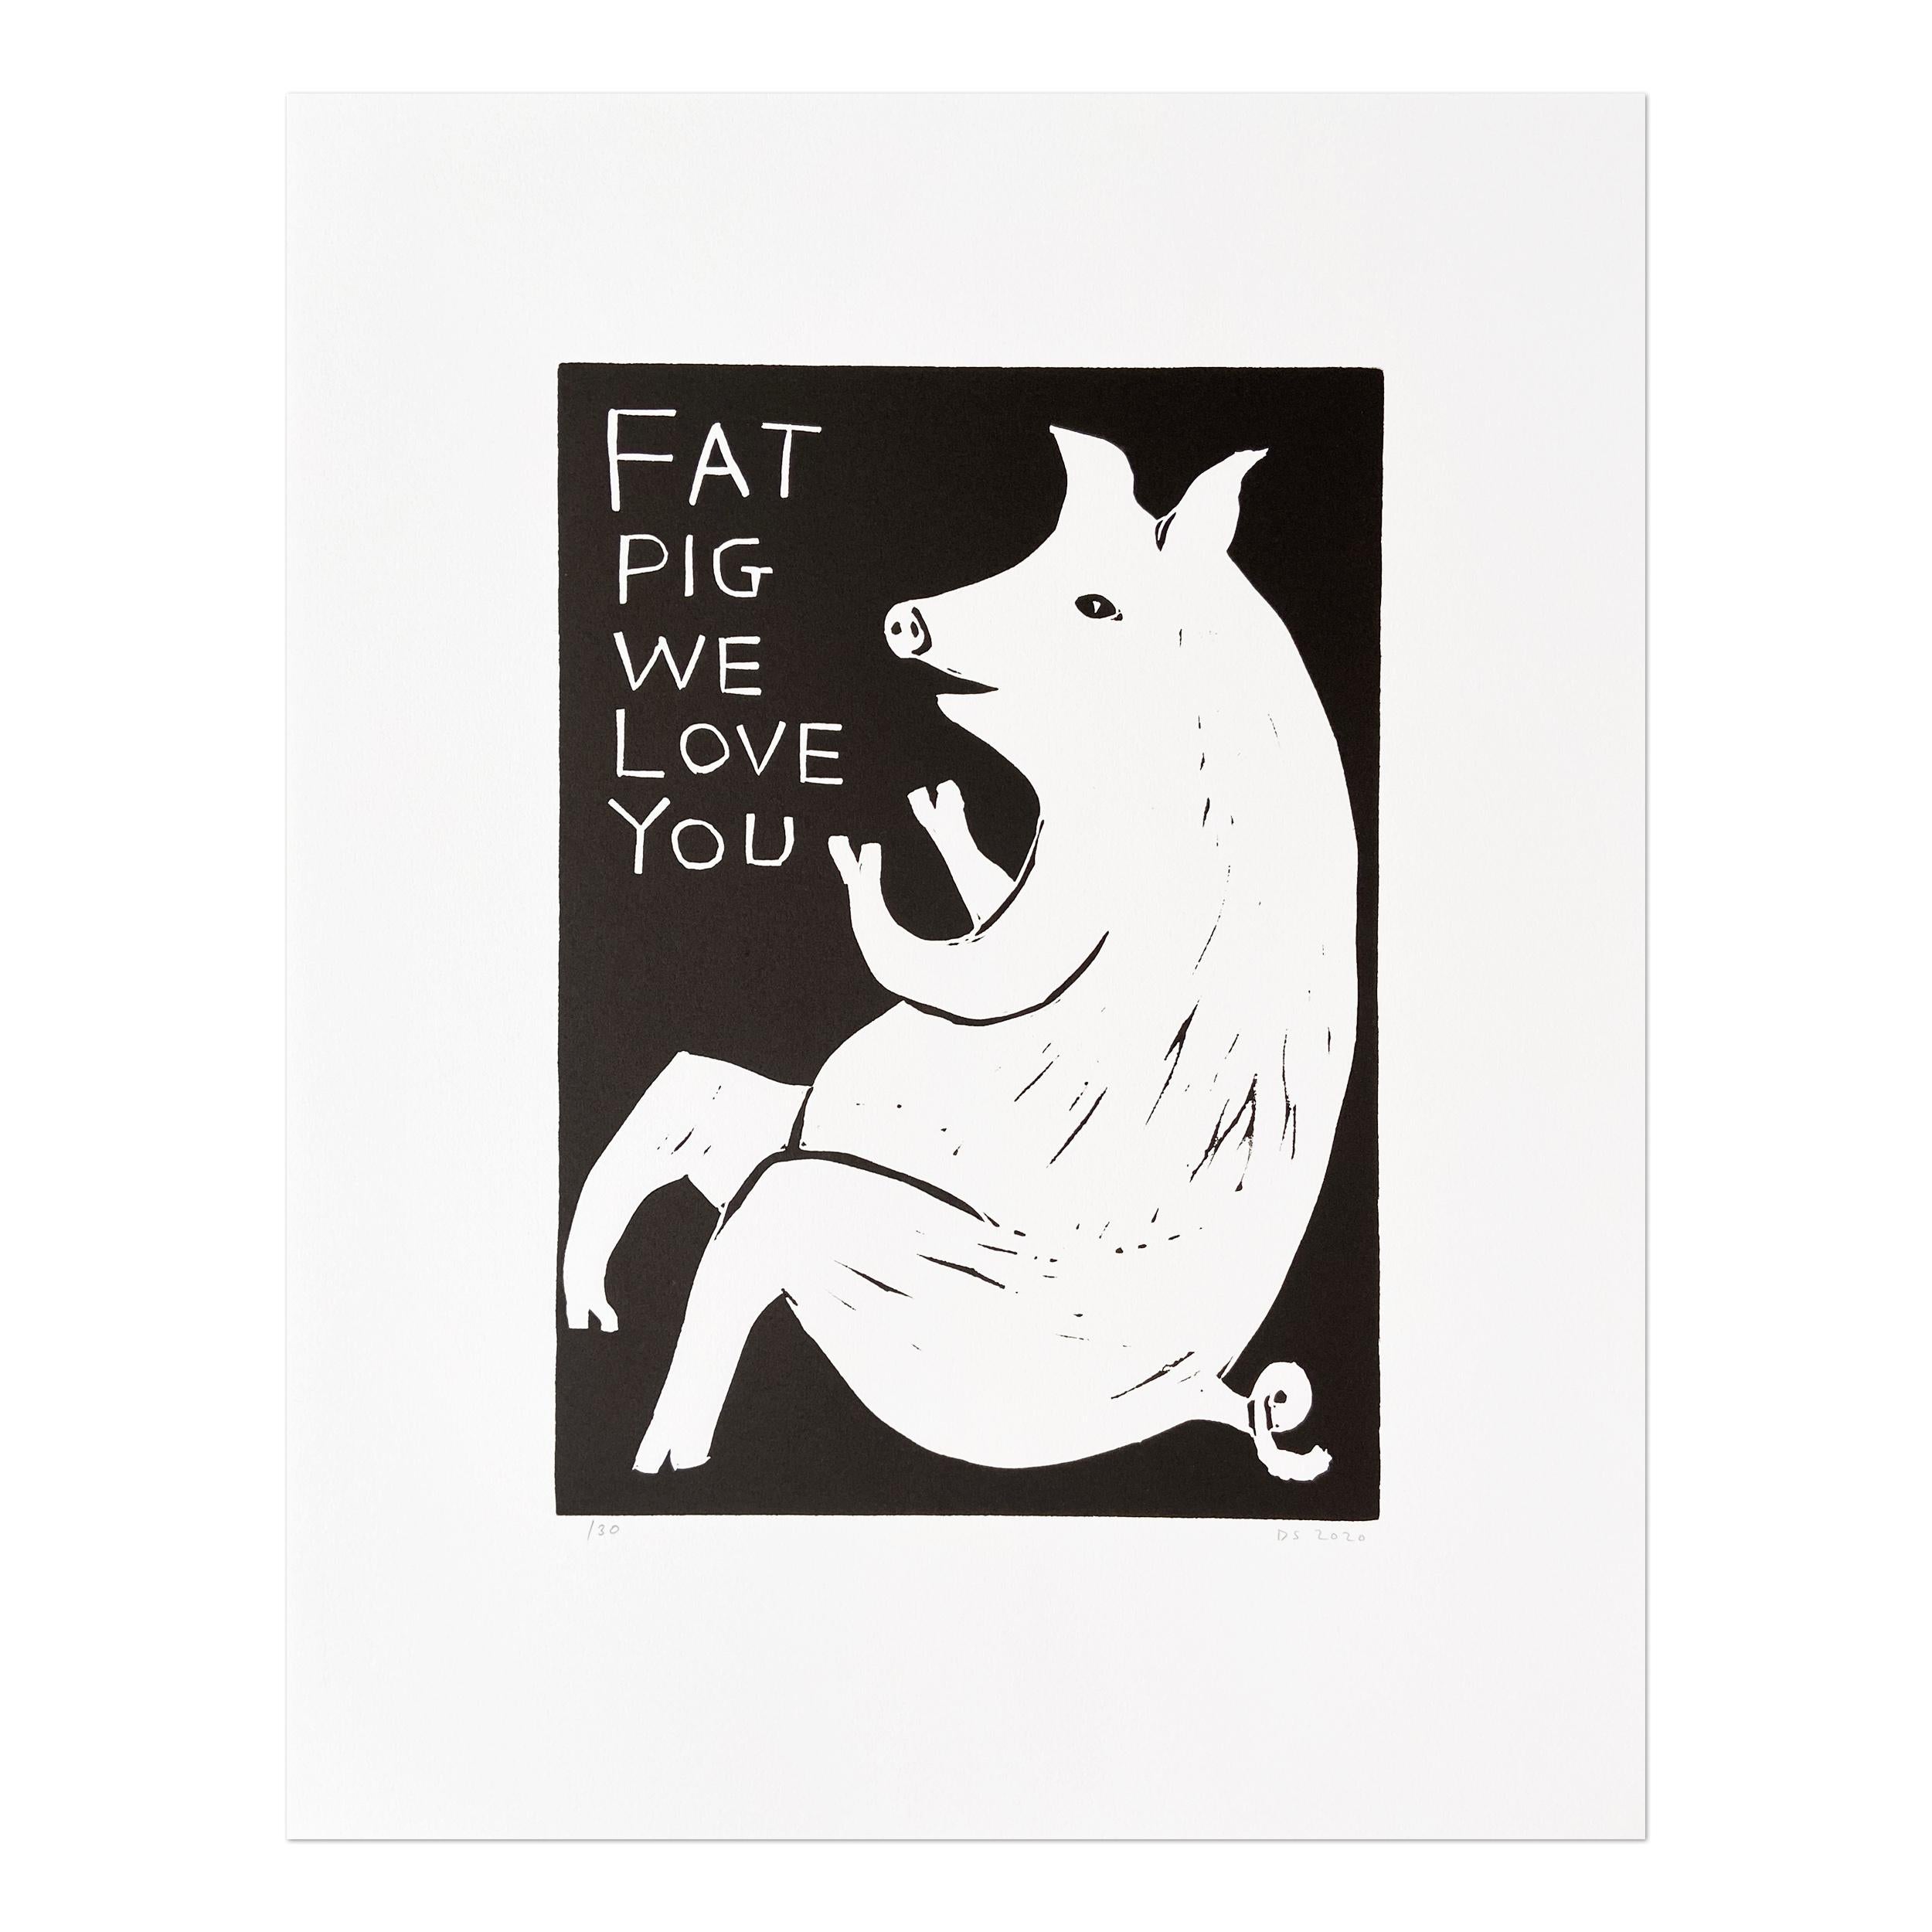 David Shrigley Figurative Print - Fat Pig We Love You, Linocut, Contemporary Art, 21st Century Pop Art